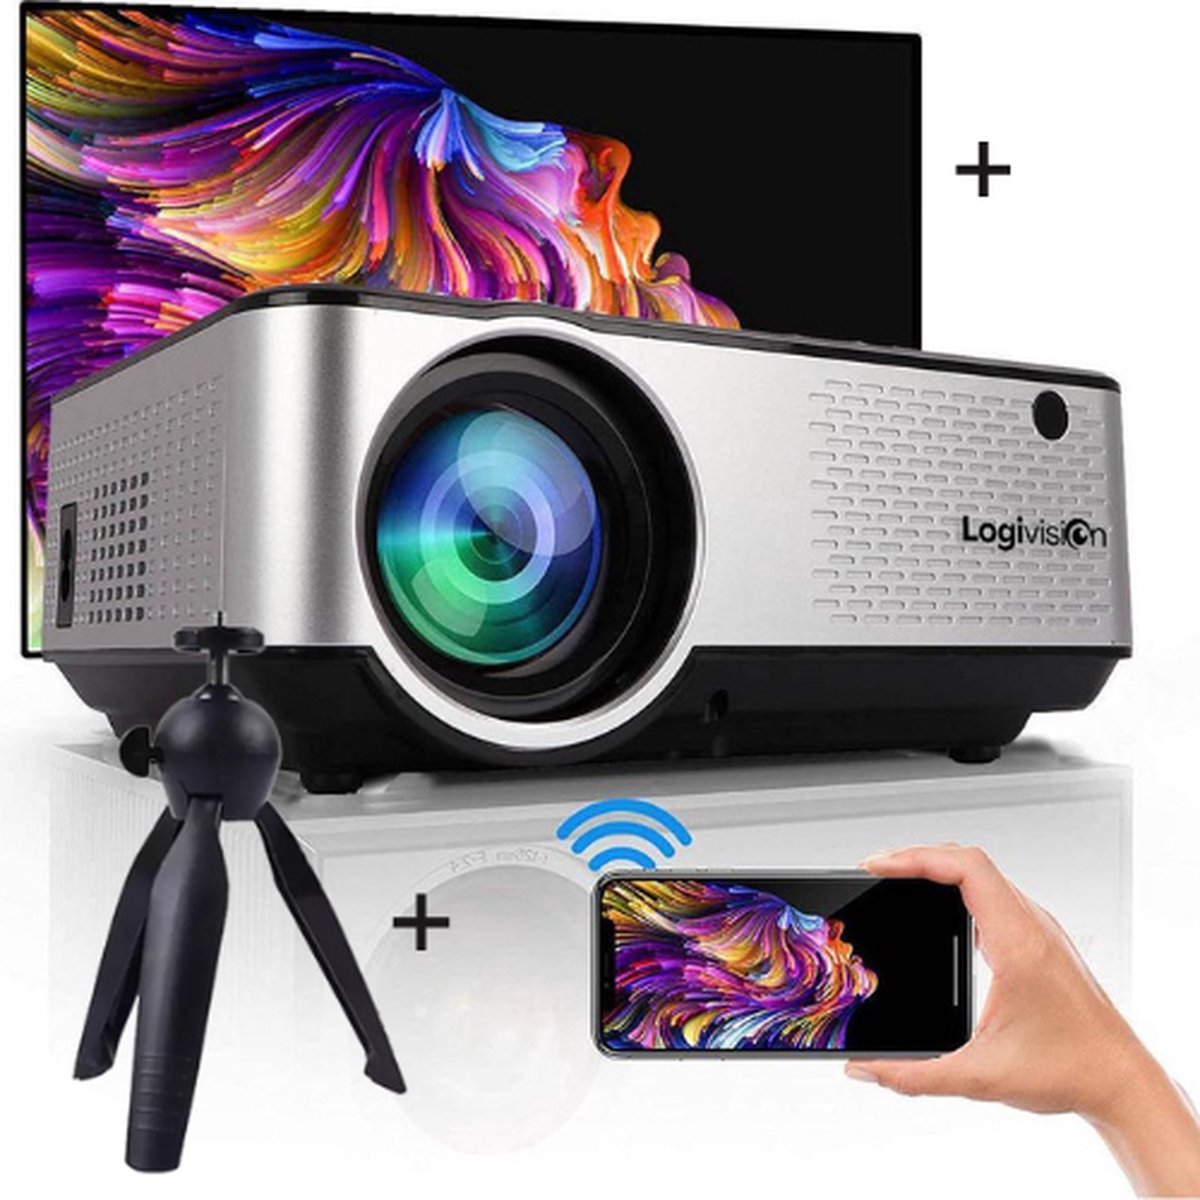 Logivision C9 FULL HD Beamer - 6500 Lumens - Mini Projector - Streamen met Telefoon Via Wifi - Afstandsbediening - Inclusief Projectiescherm - Logivision